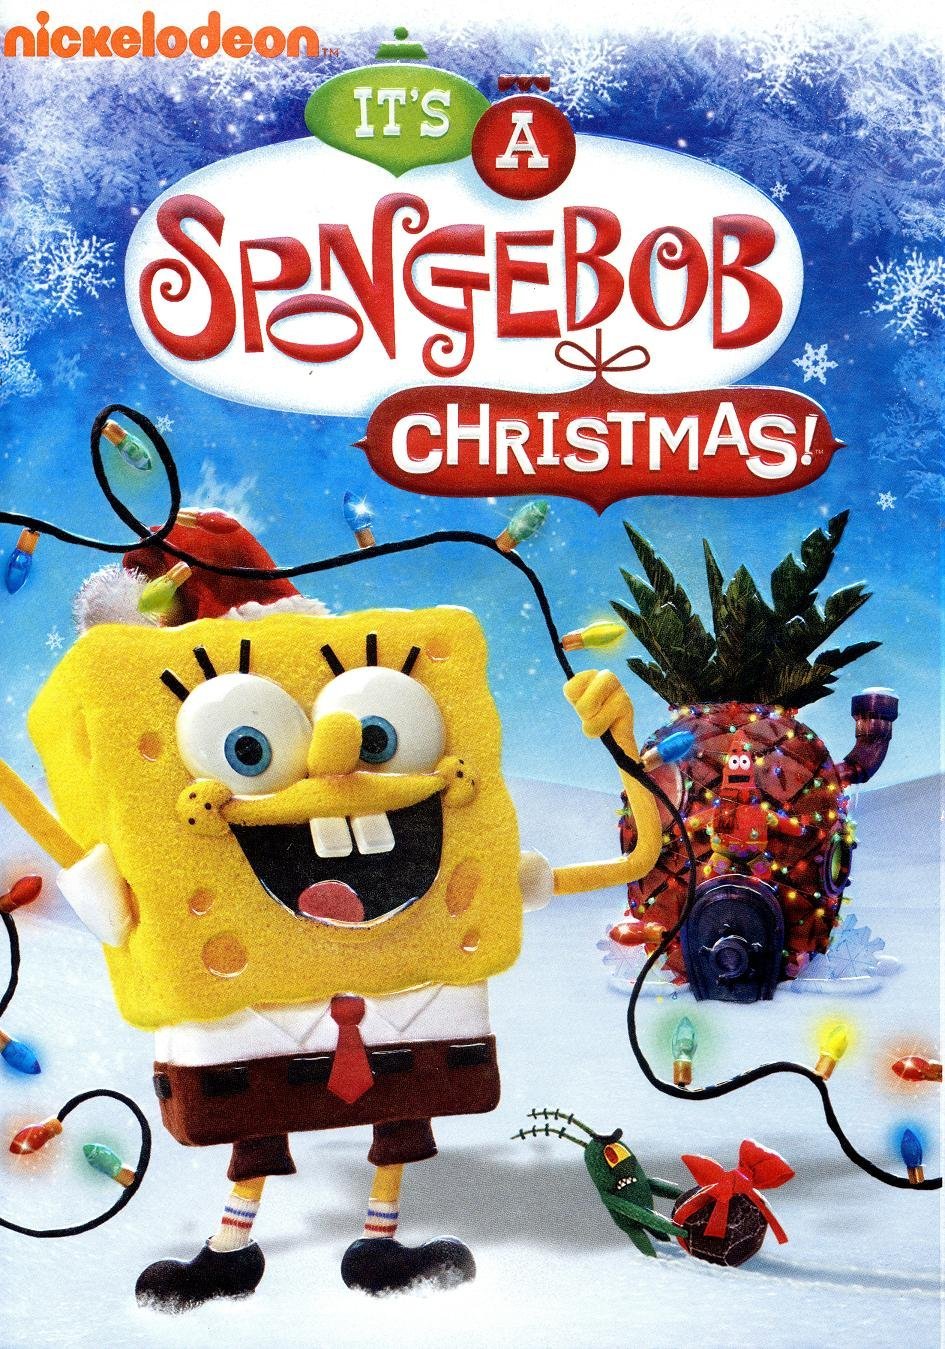 Spongebob Squarepants: The Complete Thirteenth Season (dvd) : Target